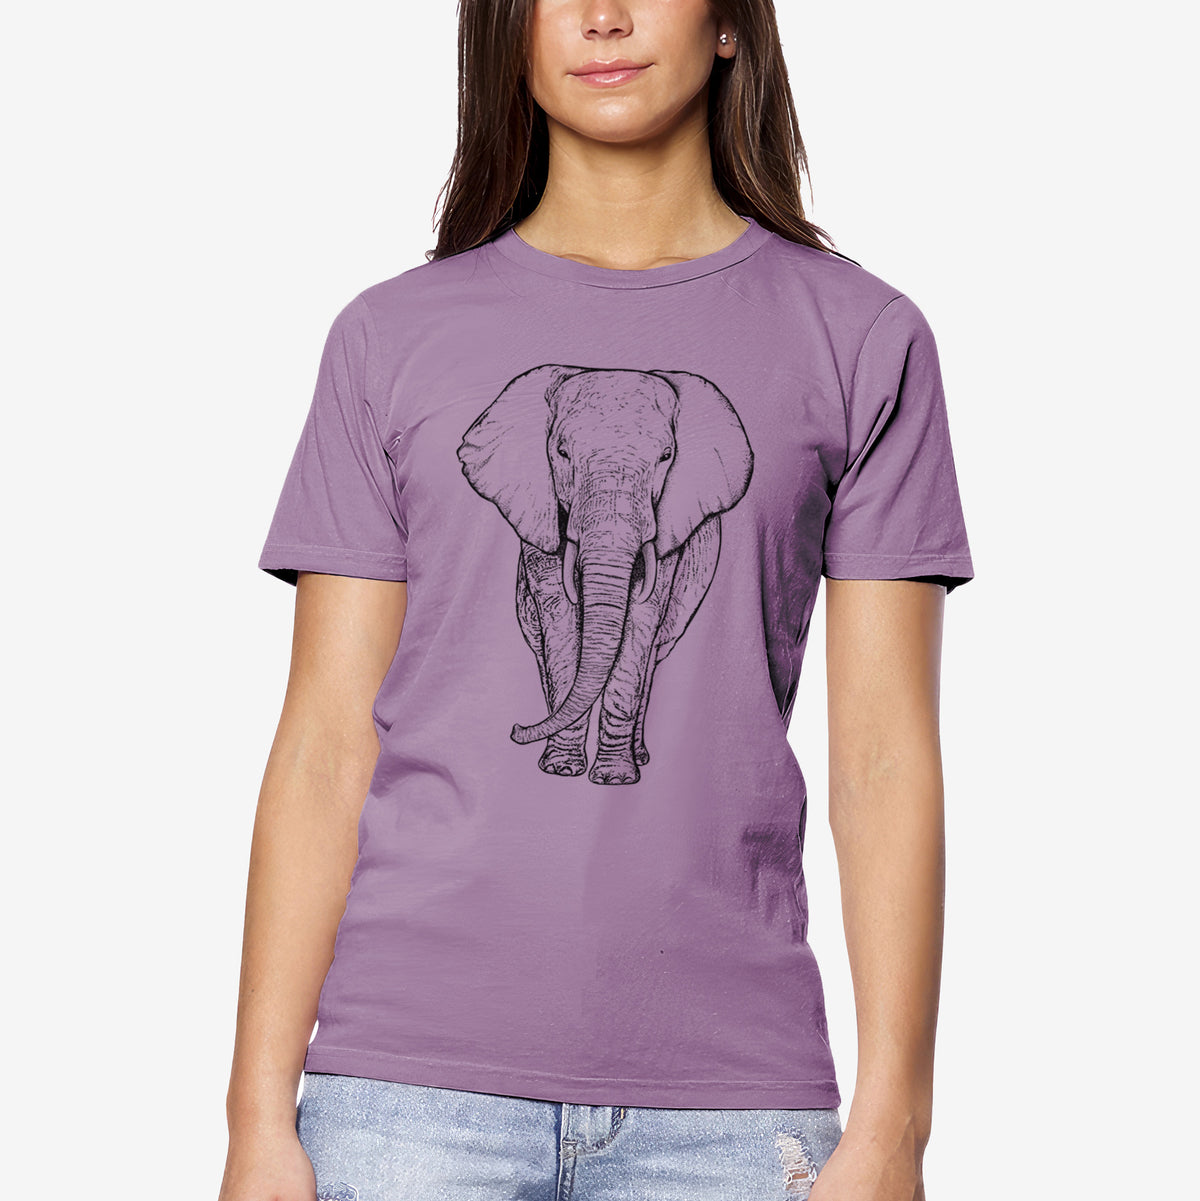 Loxodonta africana - African Elephant - Unisex Crewneck - Made in USA - 100% Organic Cotton